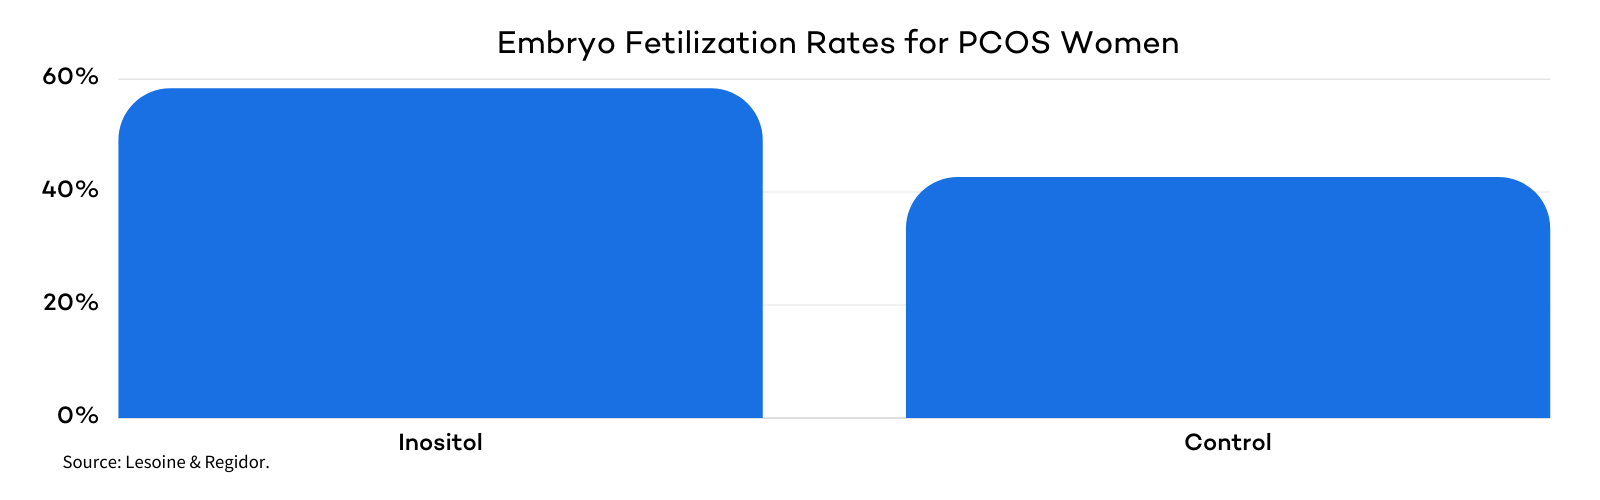 Inositol for Embryo Fertilization - PCOS